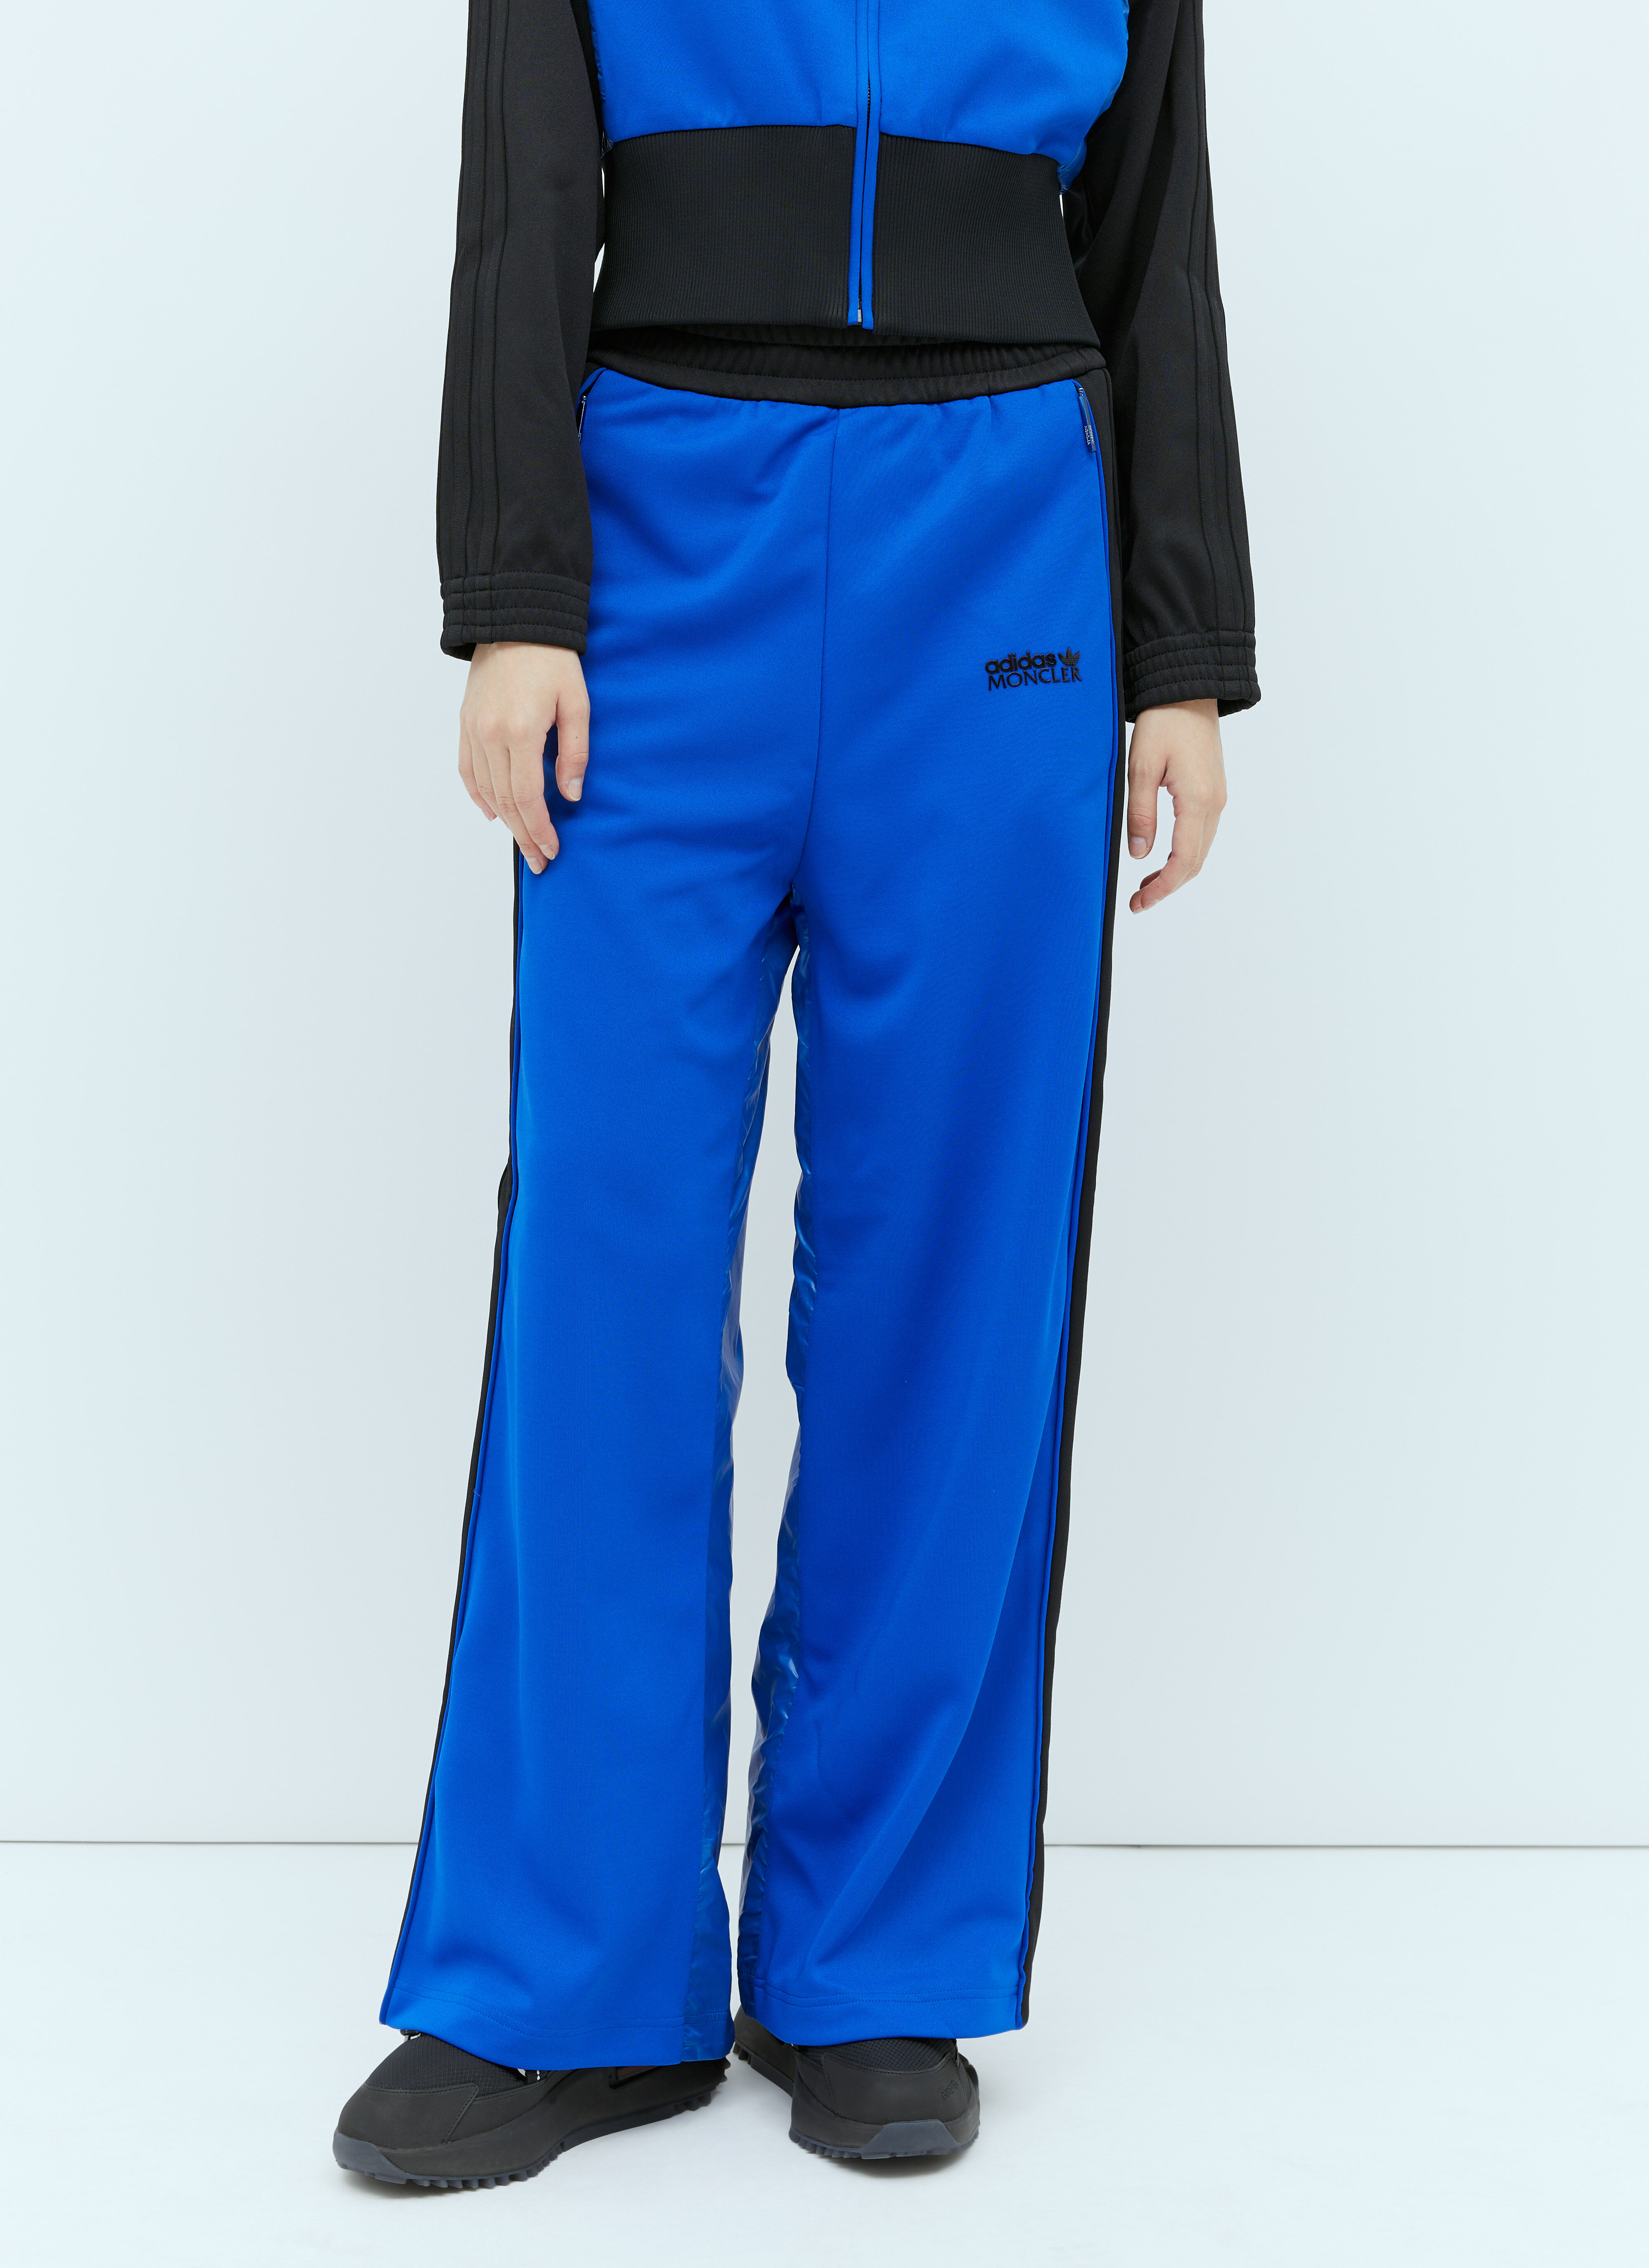 Moncler x adidas Originals Panel Construction Track Pants Blue mad0254005